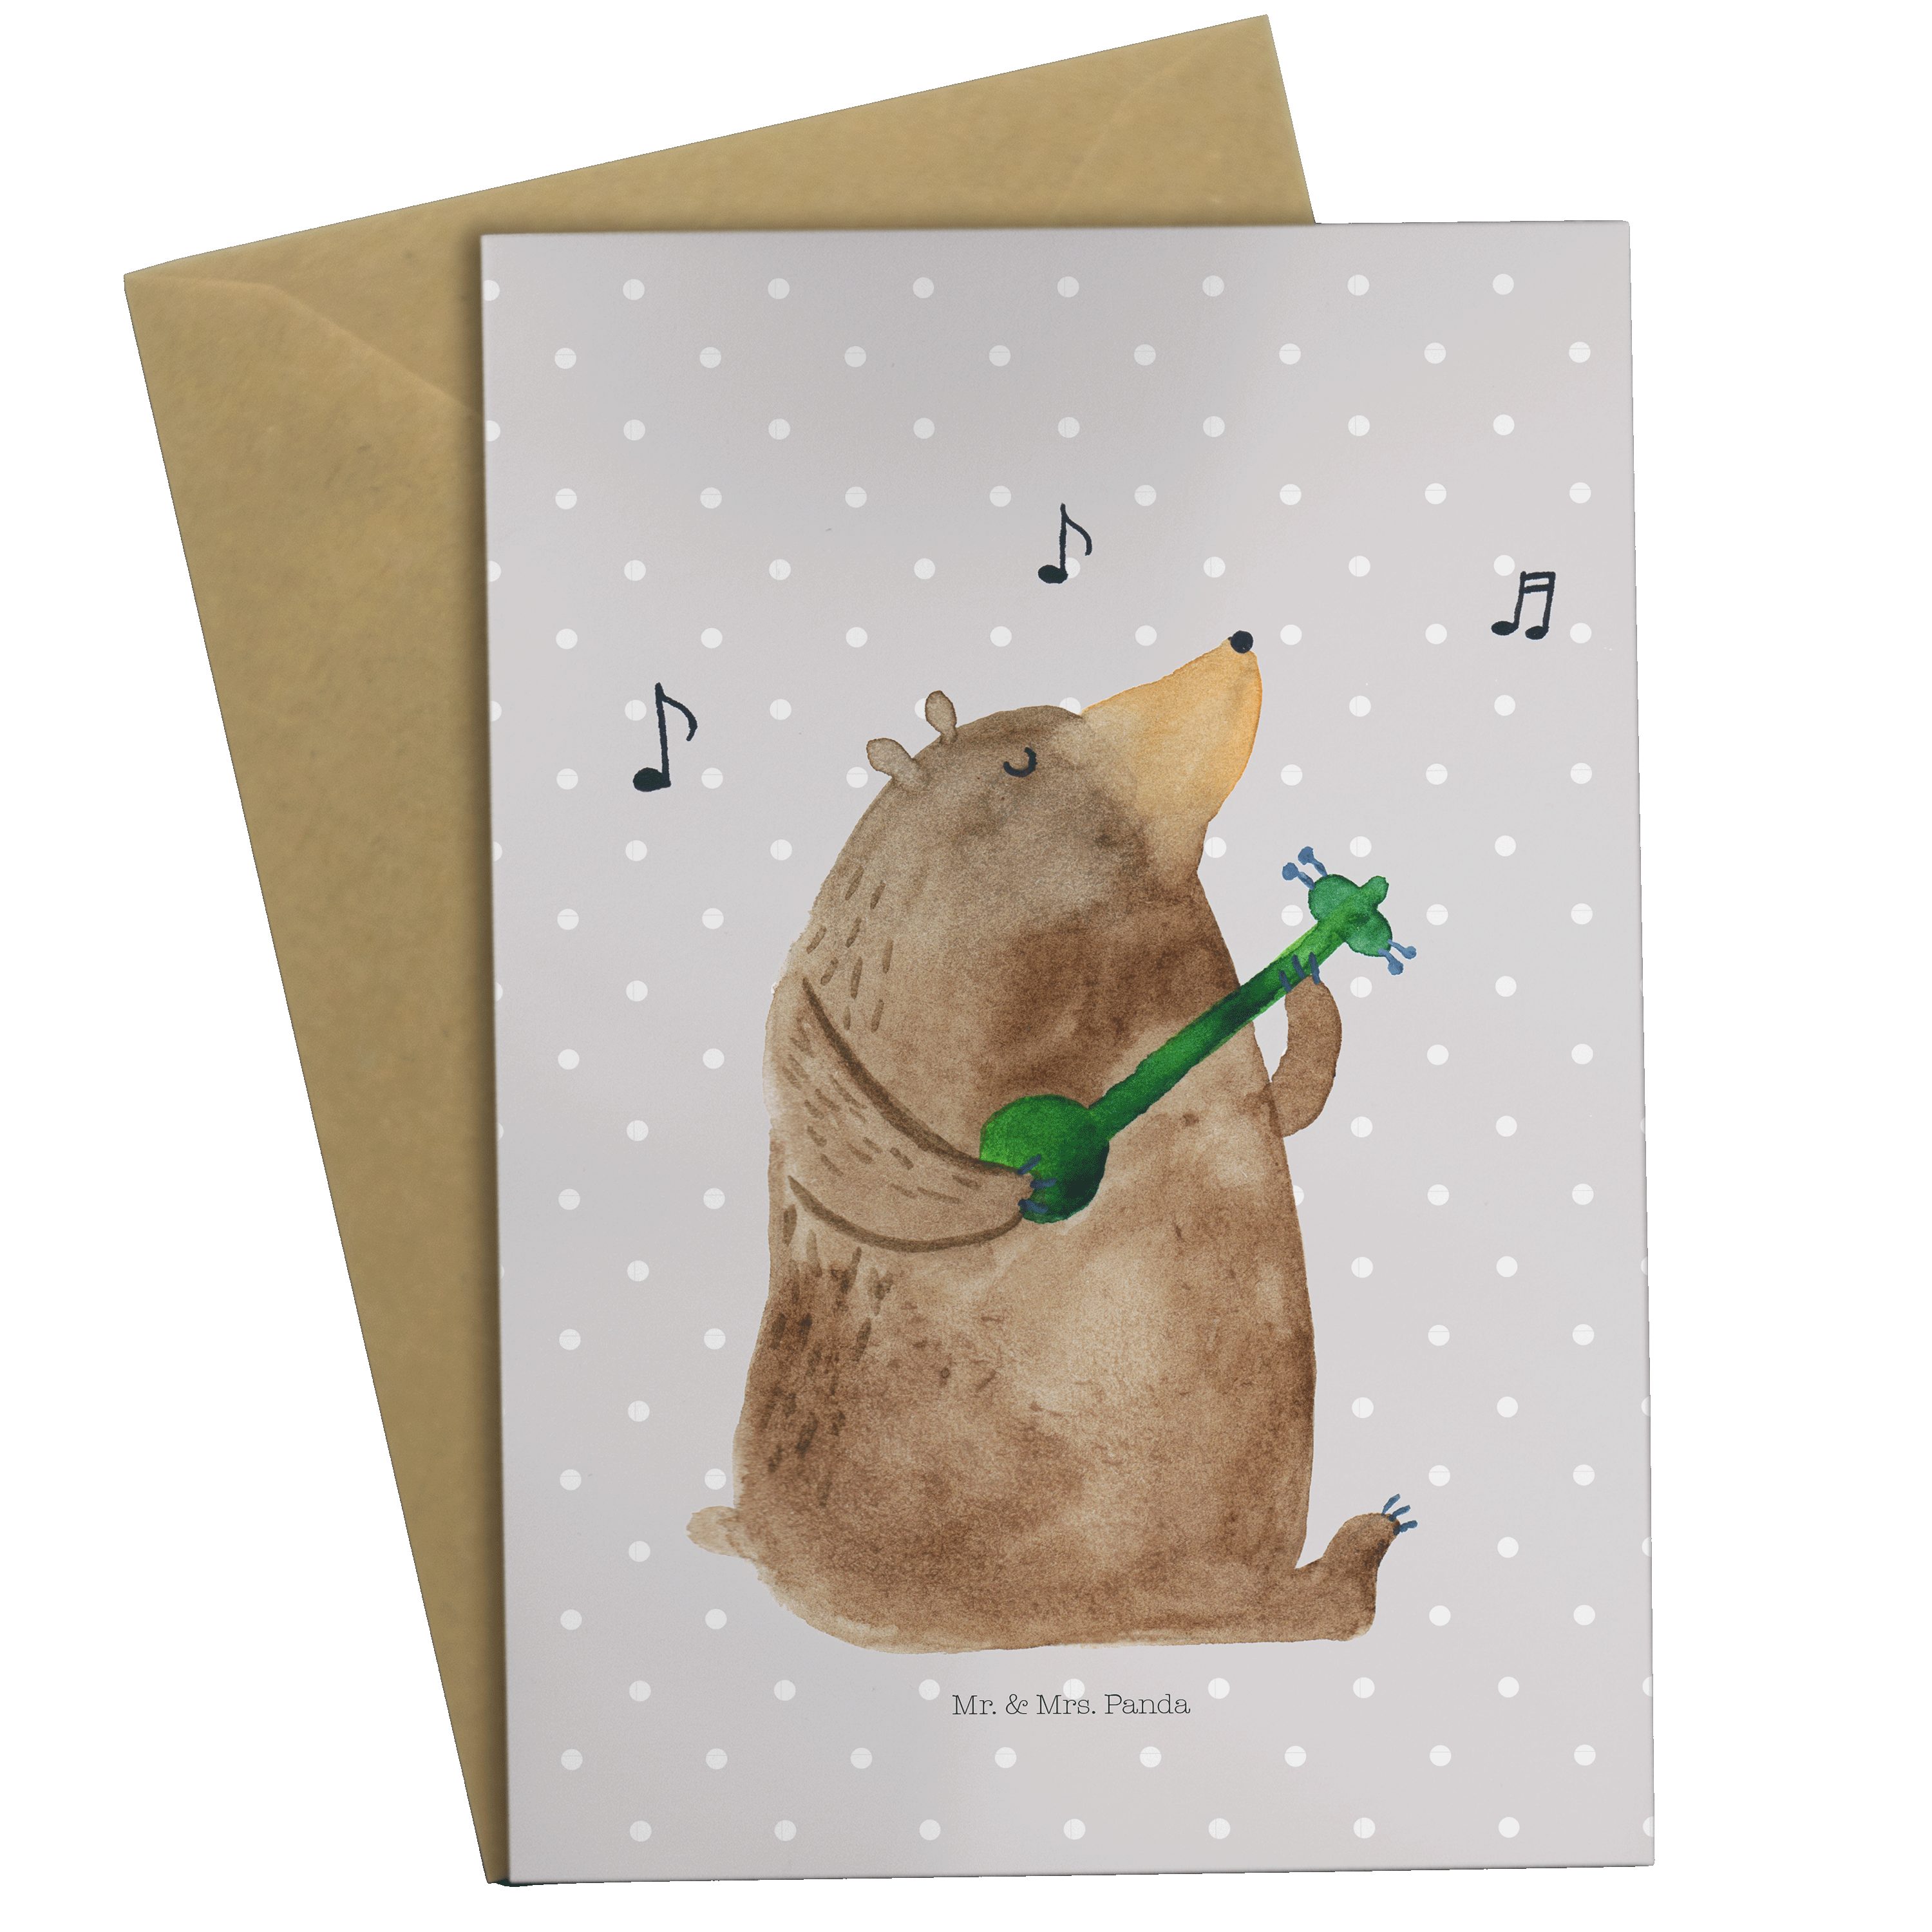 Mr. & Mrs. Geburtstagskarte, Karte, Panda Pastell Grau - Bär Grußkarte Gitarre Geschenk, - Einla